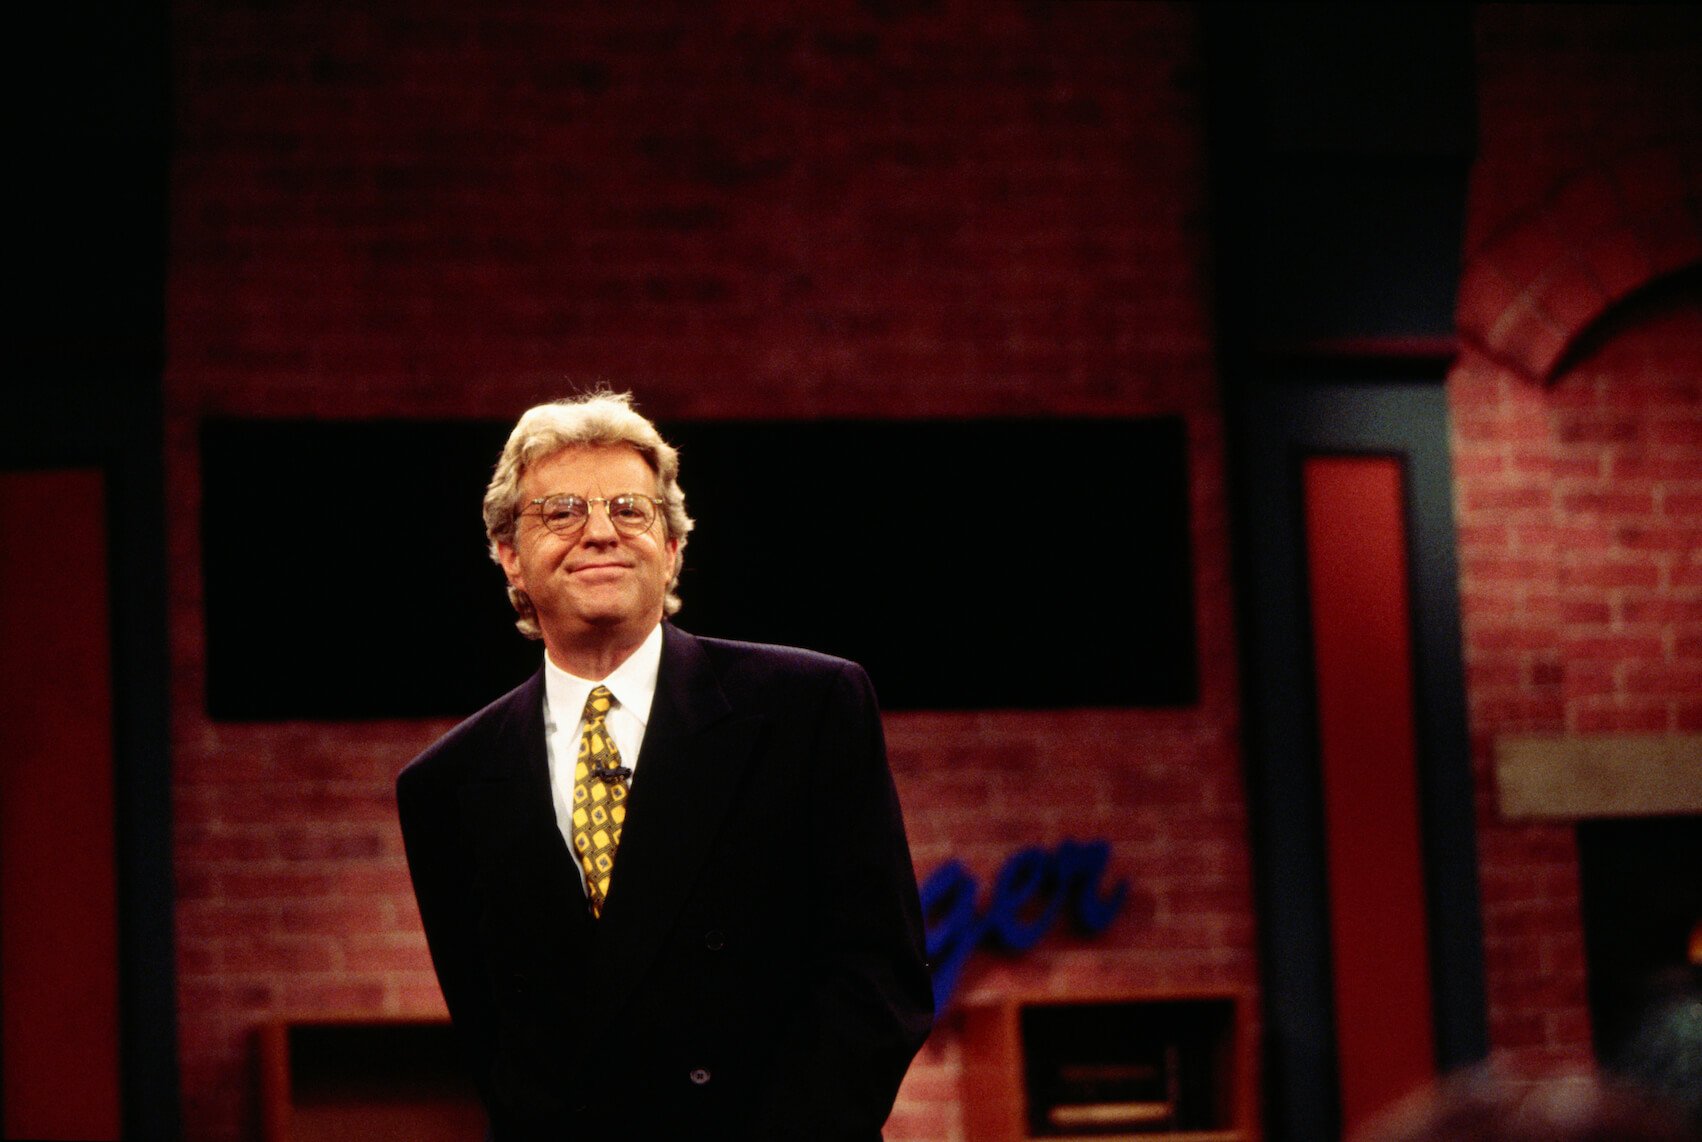 Jerry Springer on 'The Jerry Springer Show'